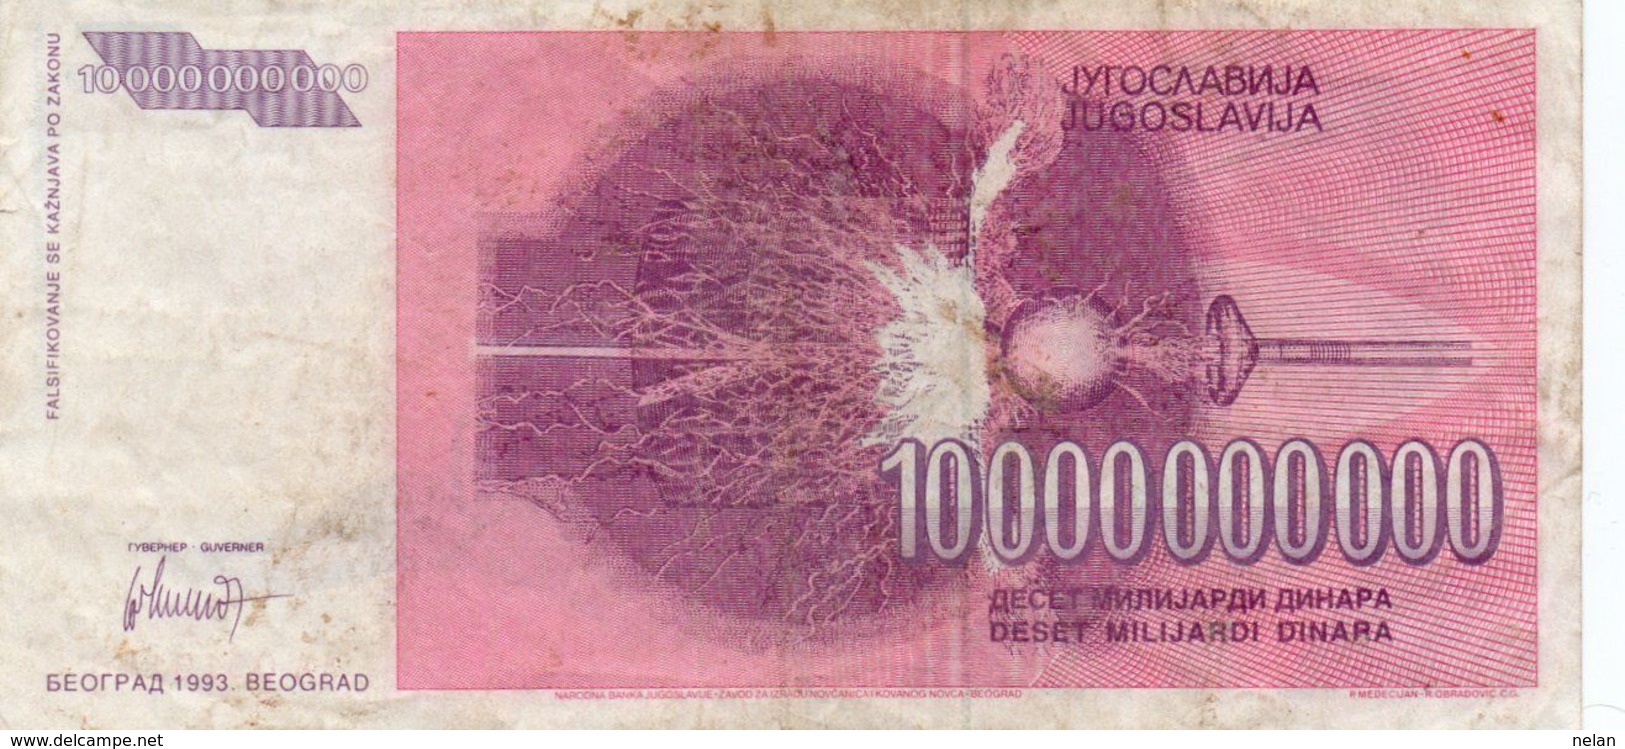 JUGOSLAVIA 10000000000 DINARA 1993  P-127a  CIRC - Jugoslawien